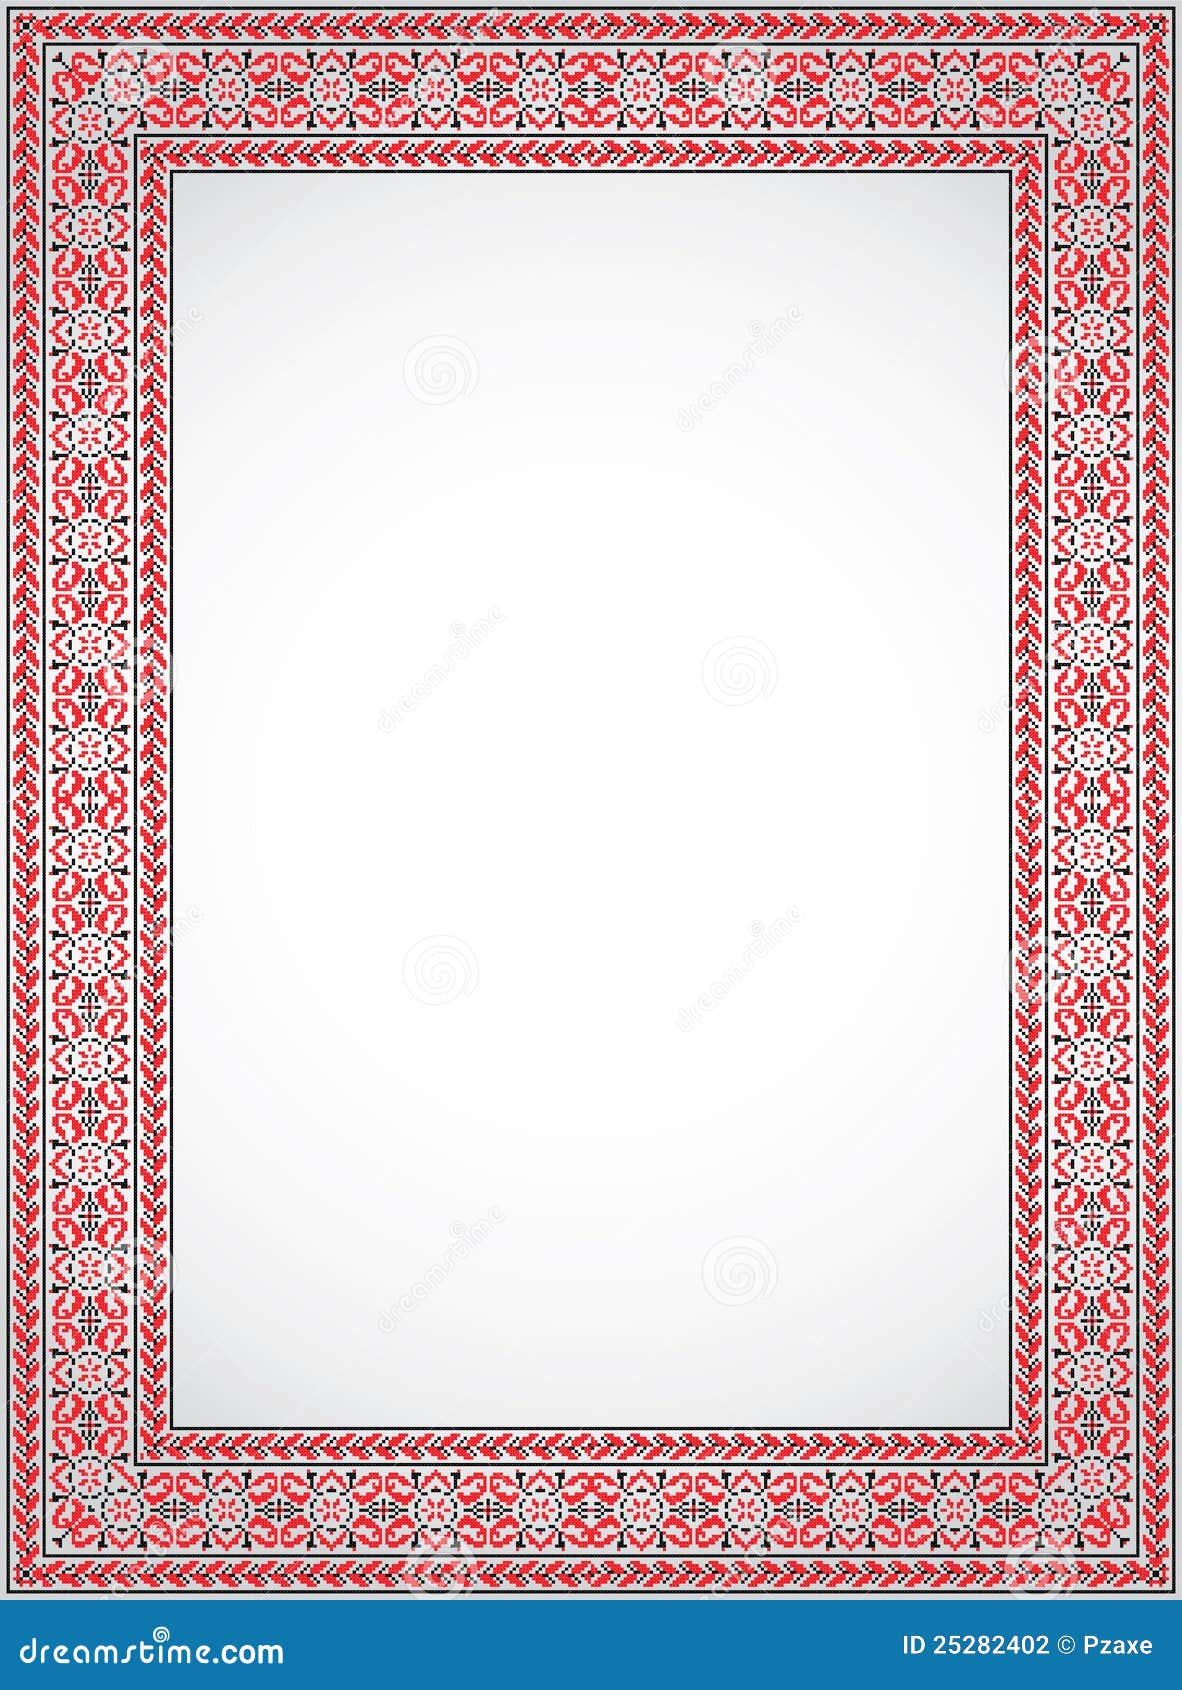 vertical frame - cross stitch ukrainian ornament